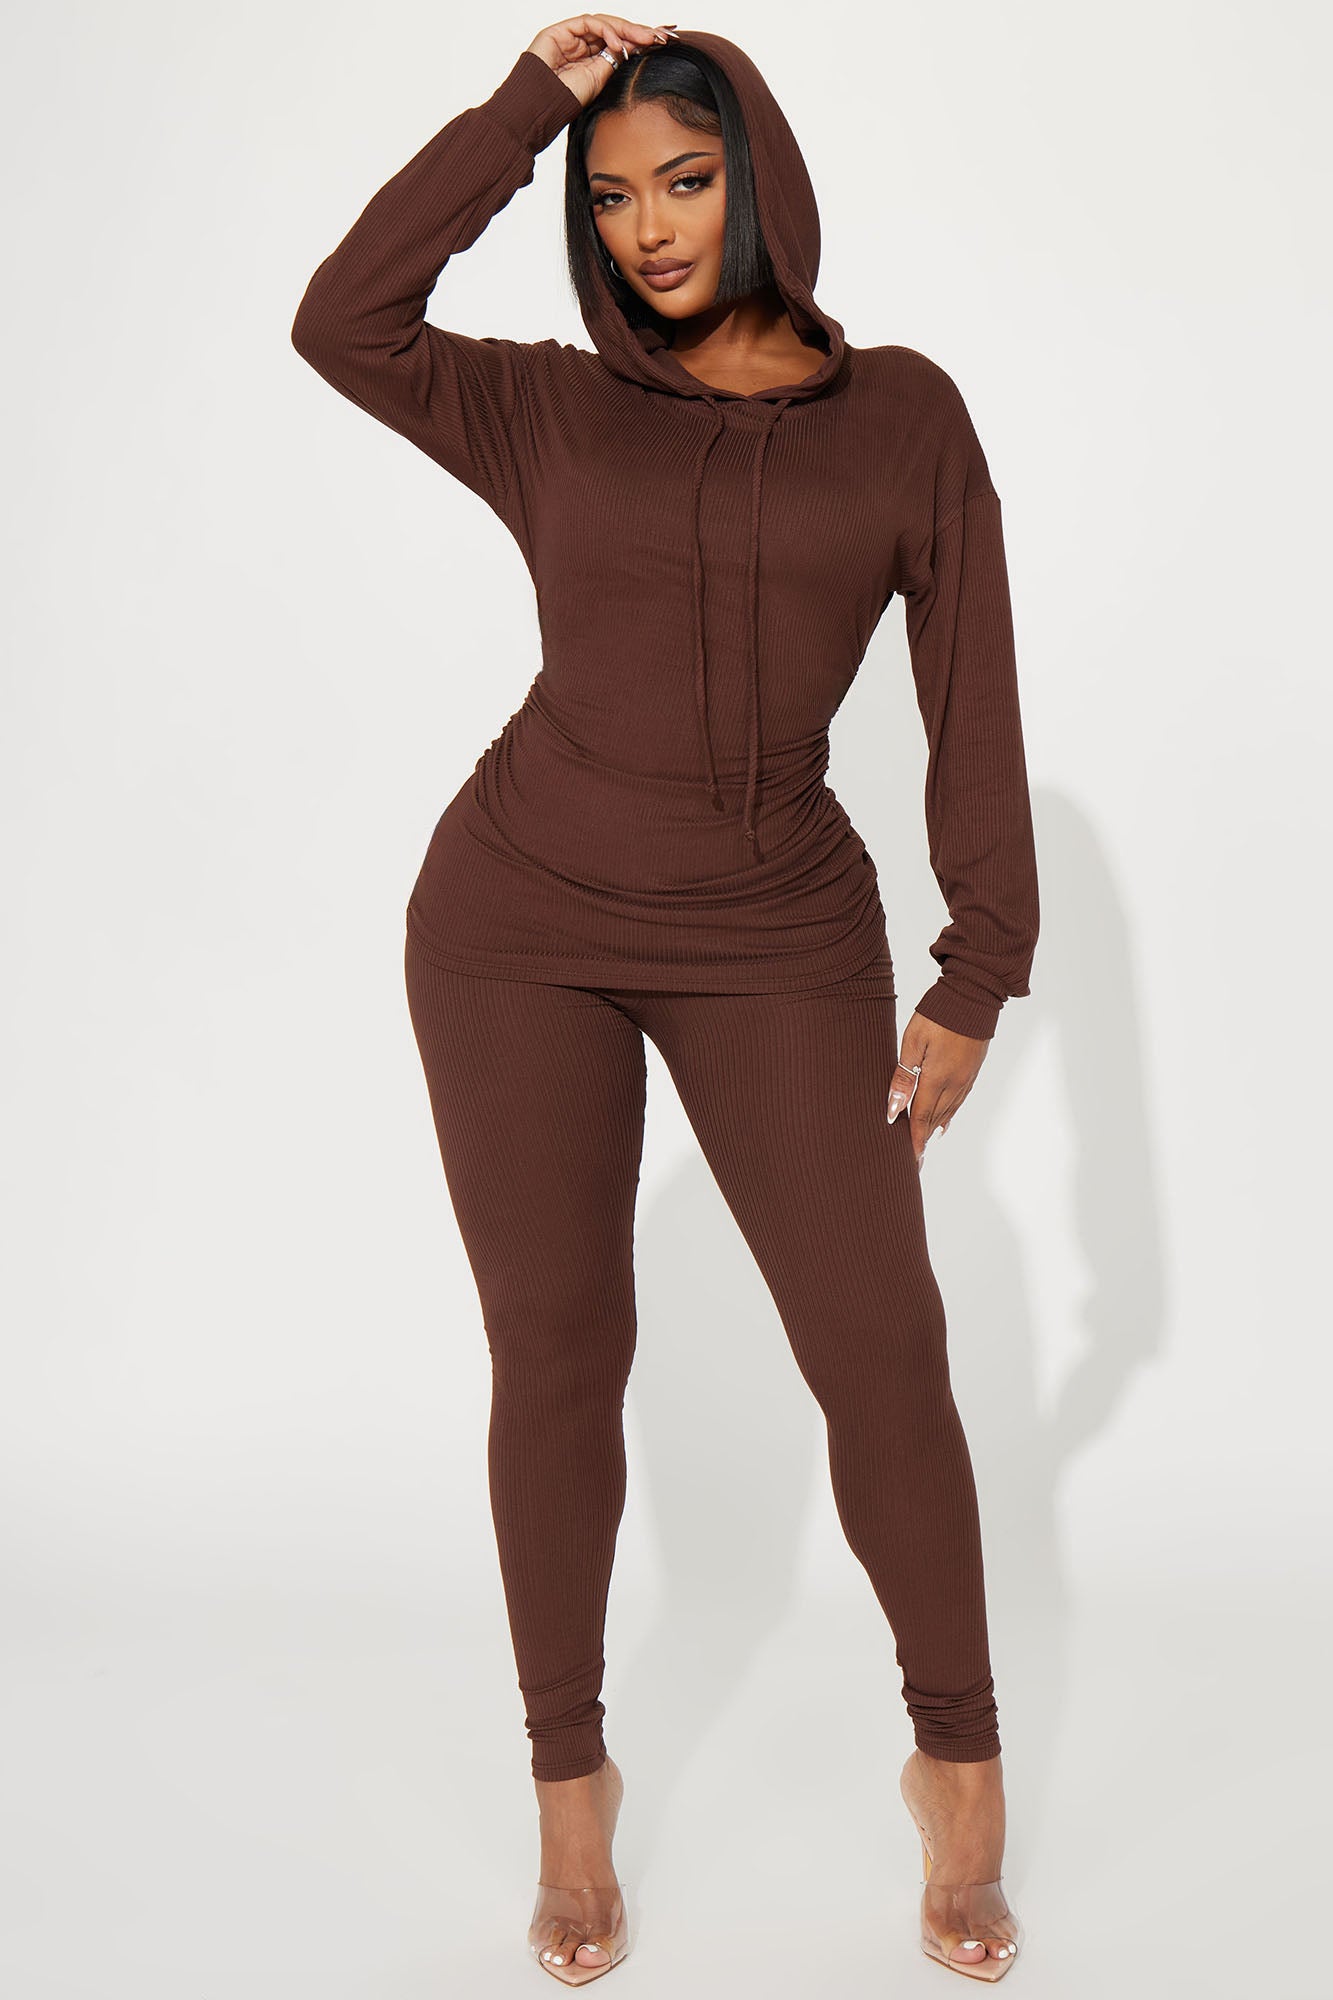 Prisma Leggings - Brown, Prisma brown legging can be chosen…